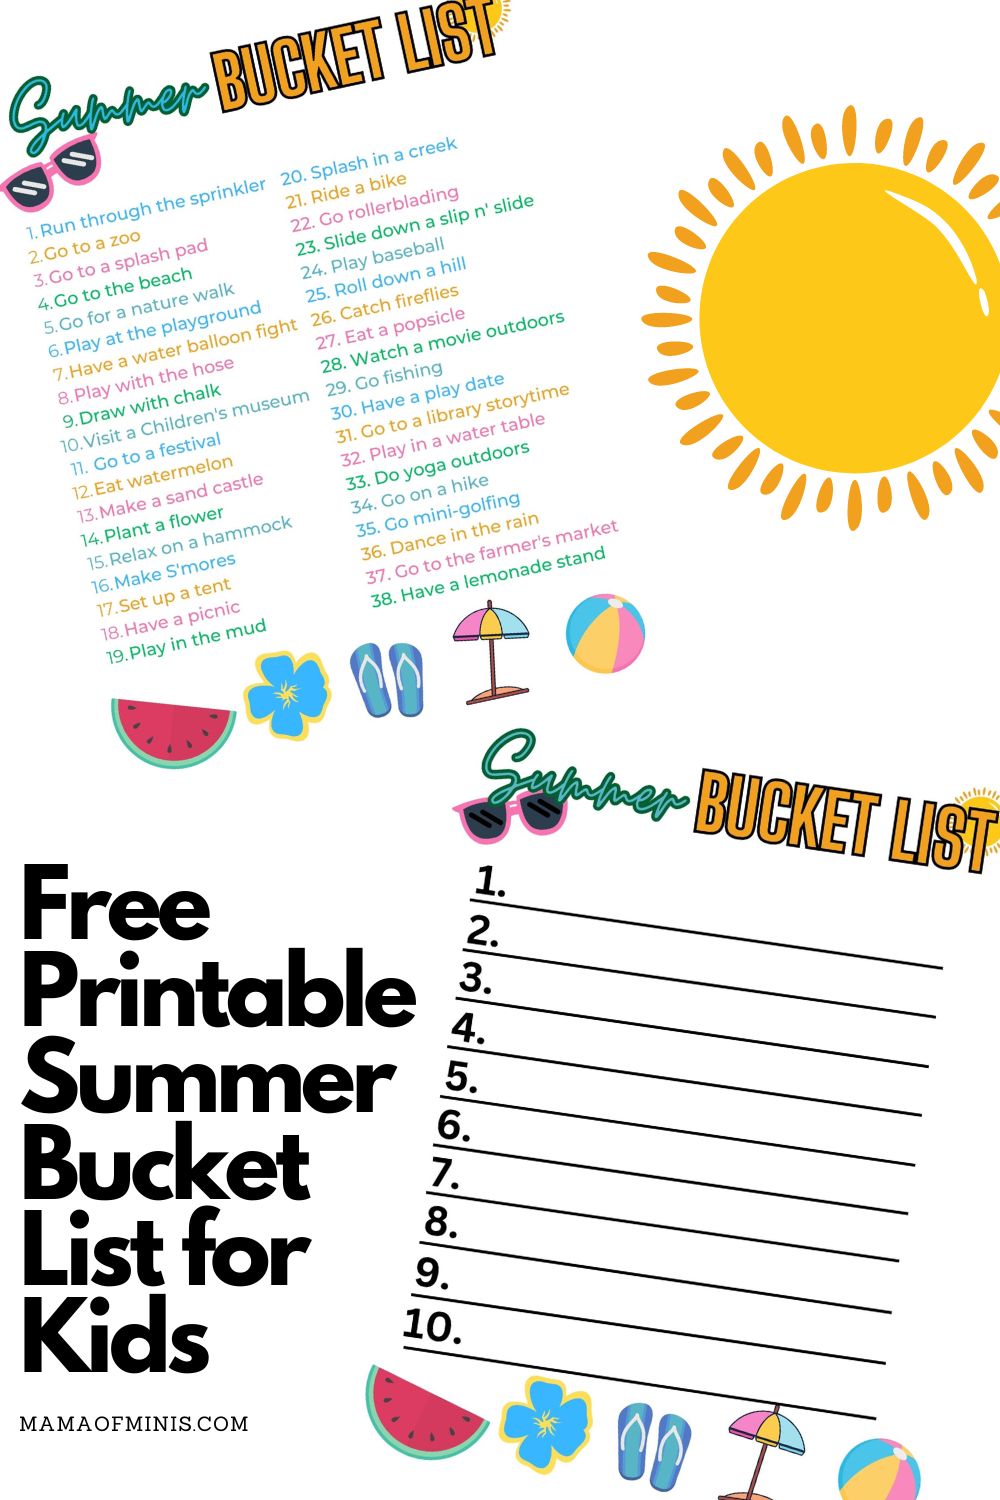 Free Printable Summer Bucket List for Kids